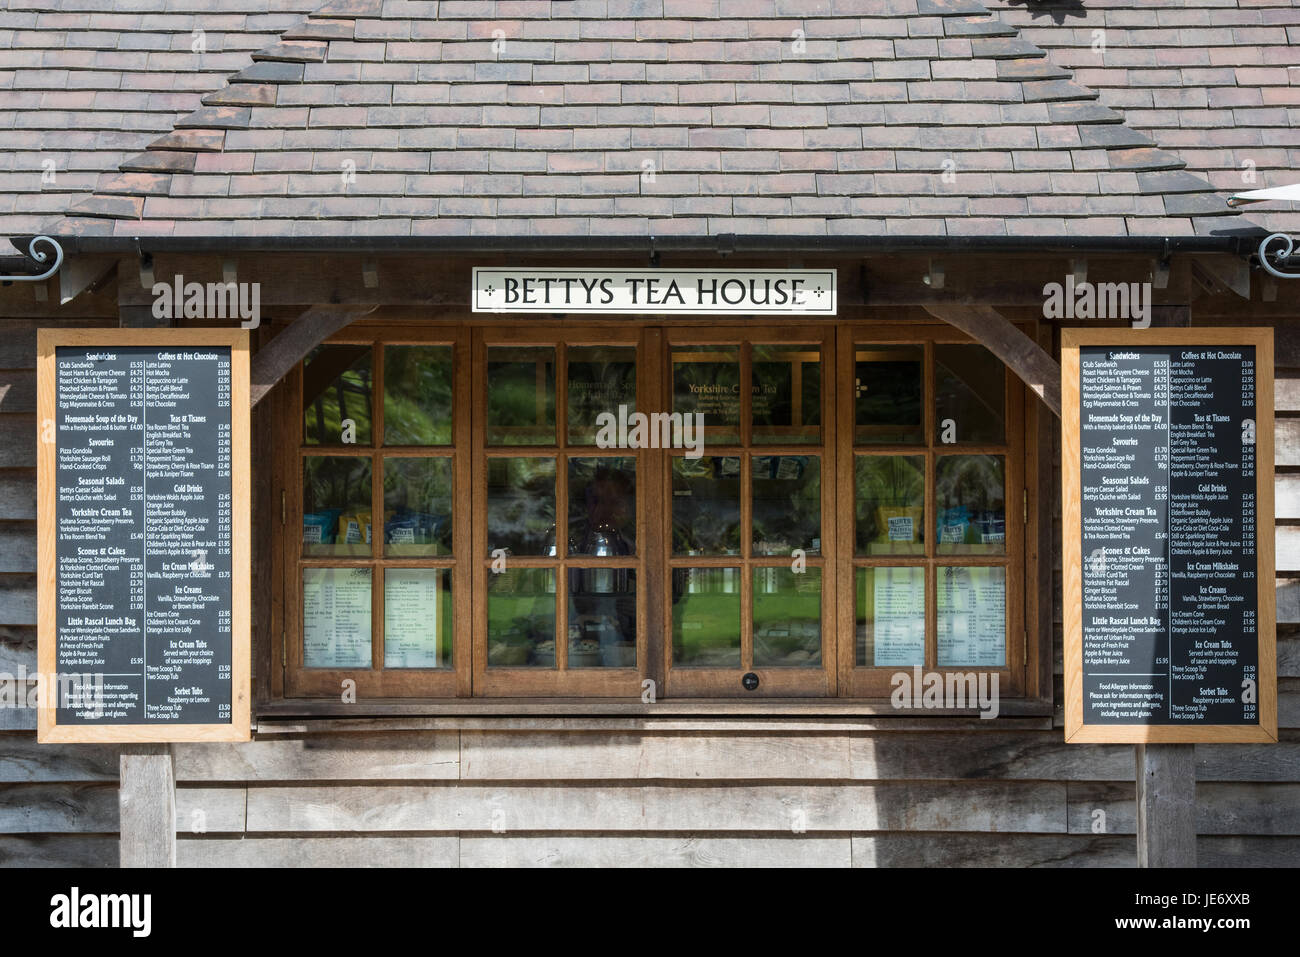 Bettys tea house kiosk in RHS Harlow Carr gardens, Harrogate, England Stock Photo